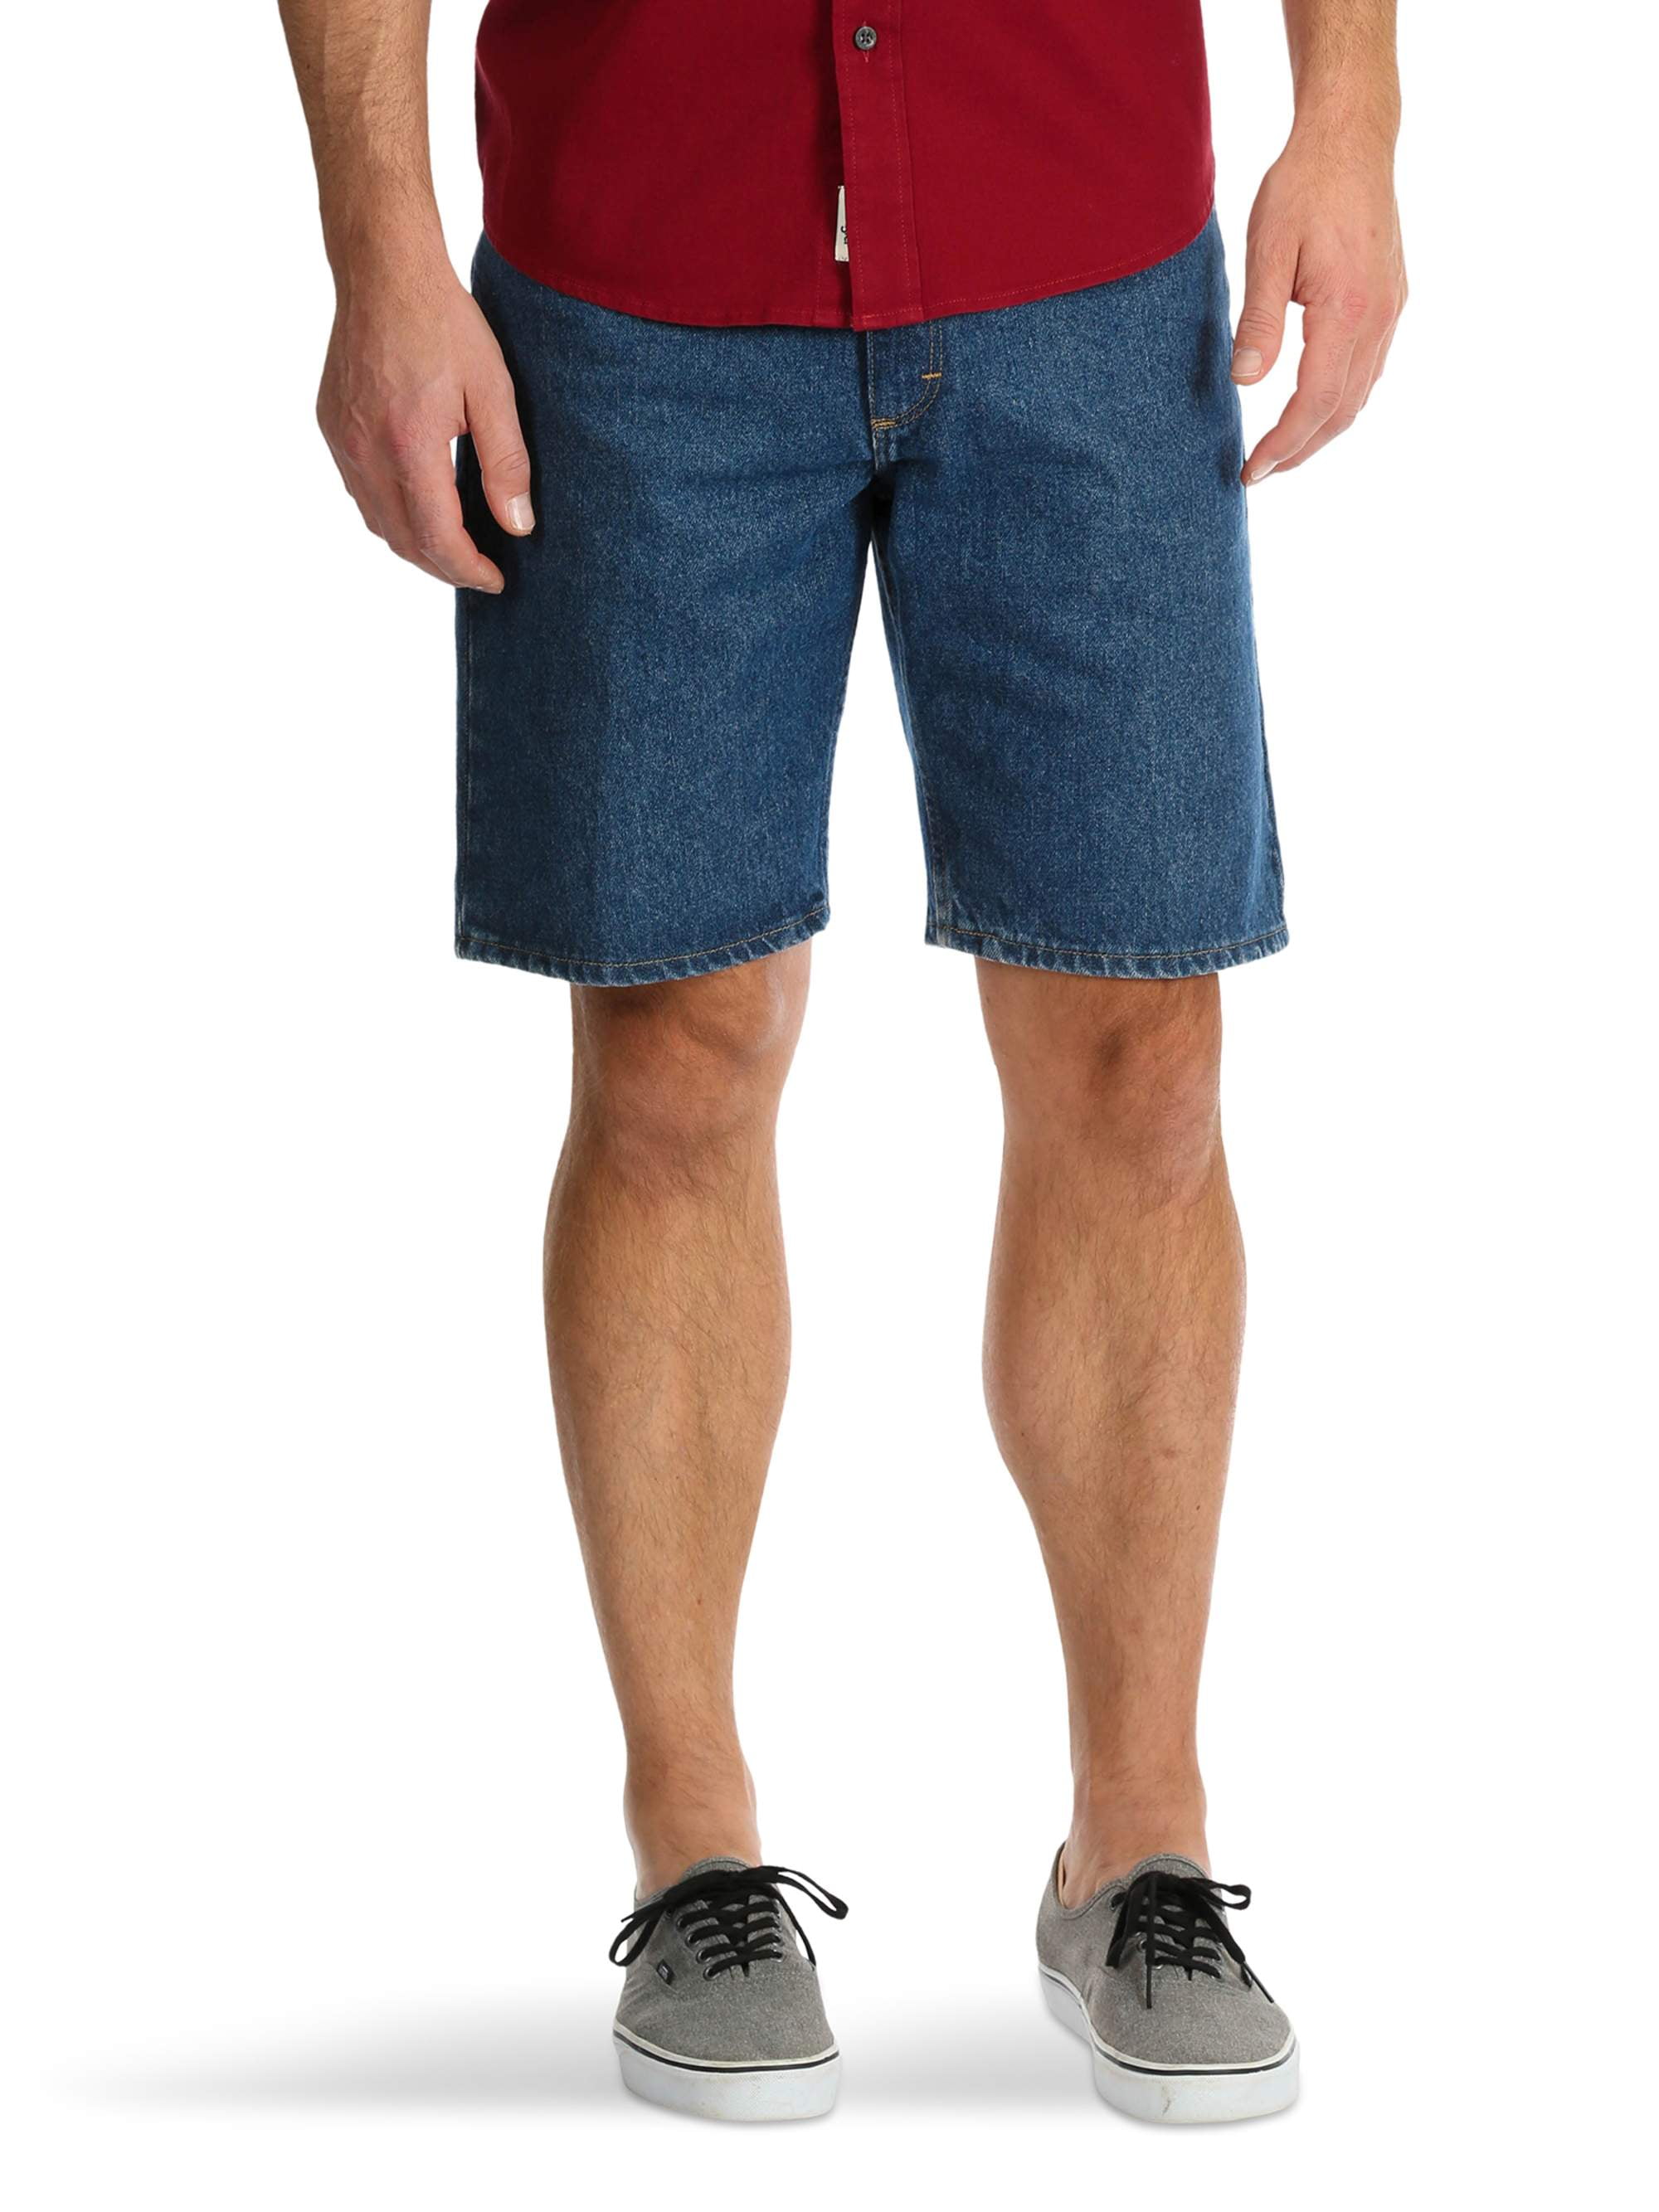 Buy Walmart Knee Length Shorts In Stock